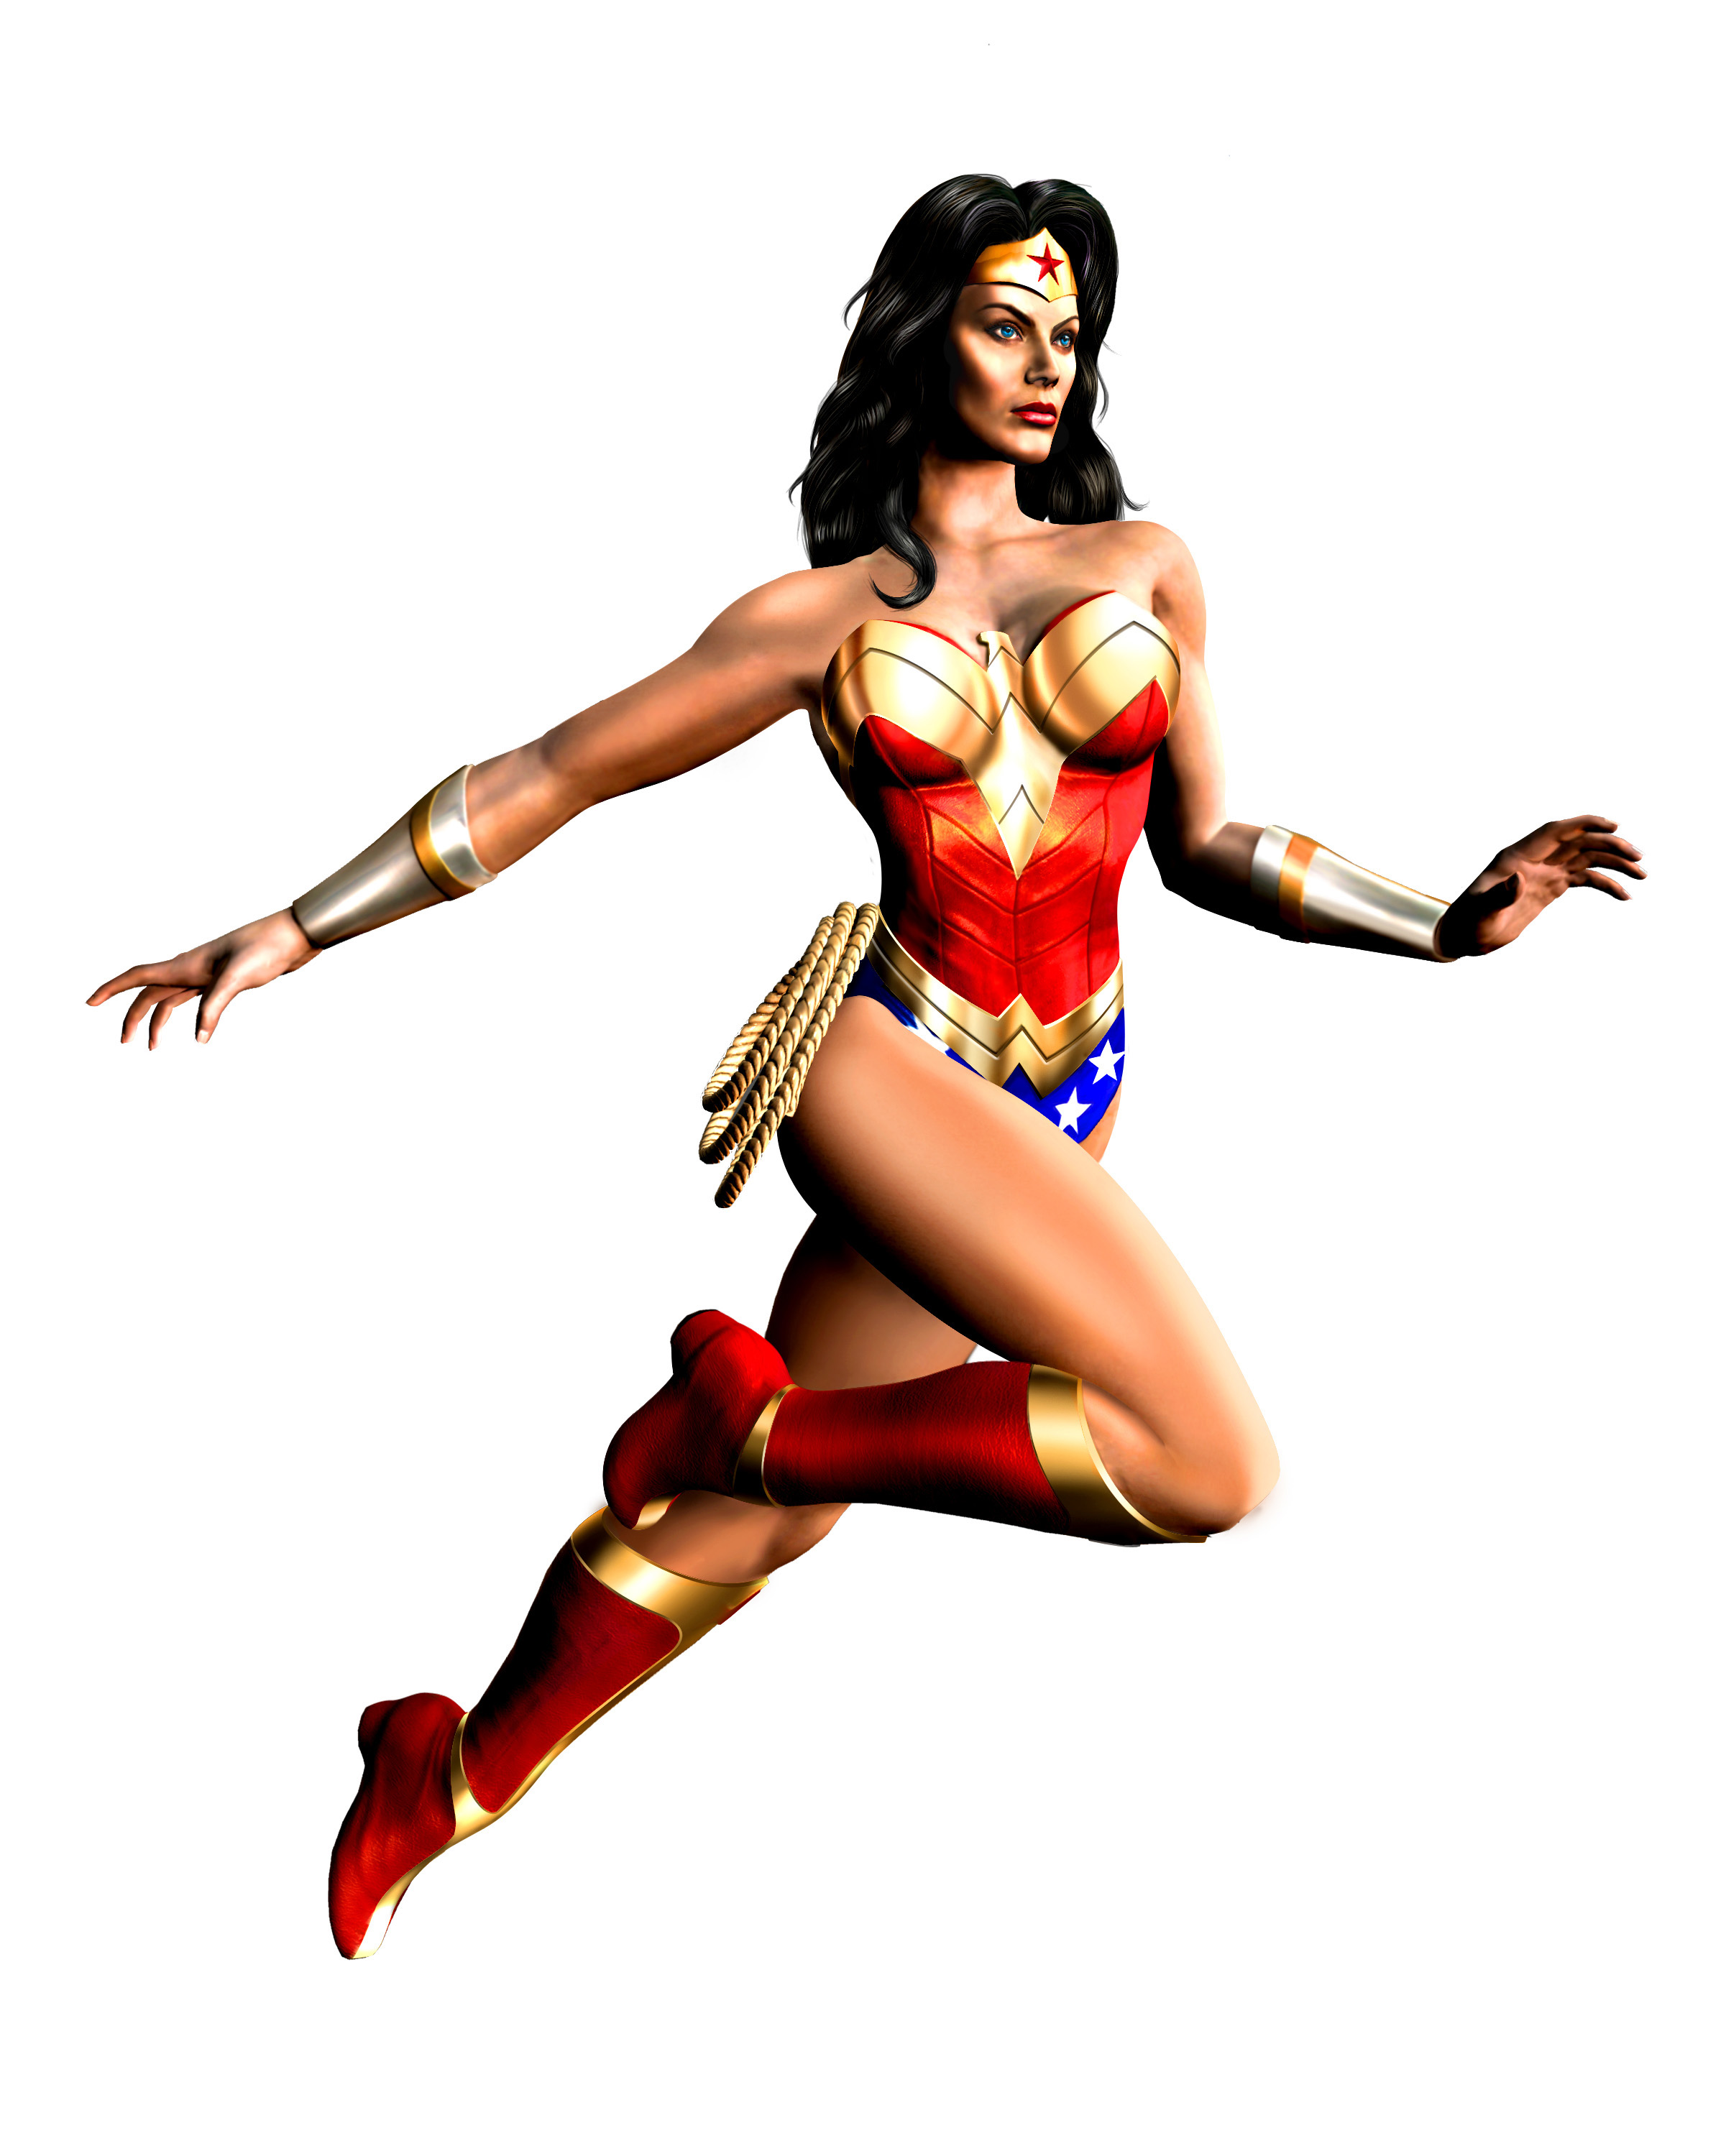 New Wonder Woman Render from MK vs DC Universe.